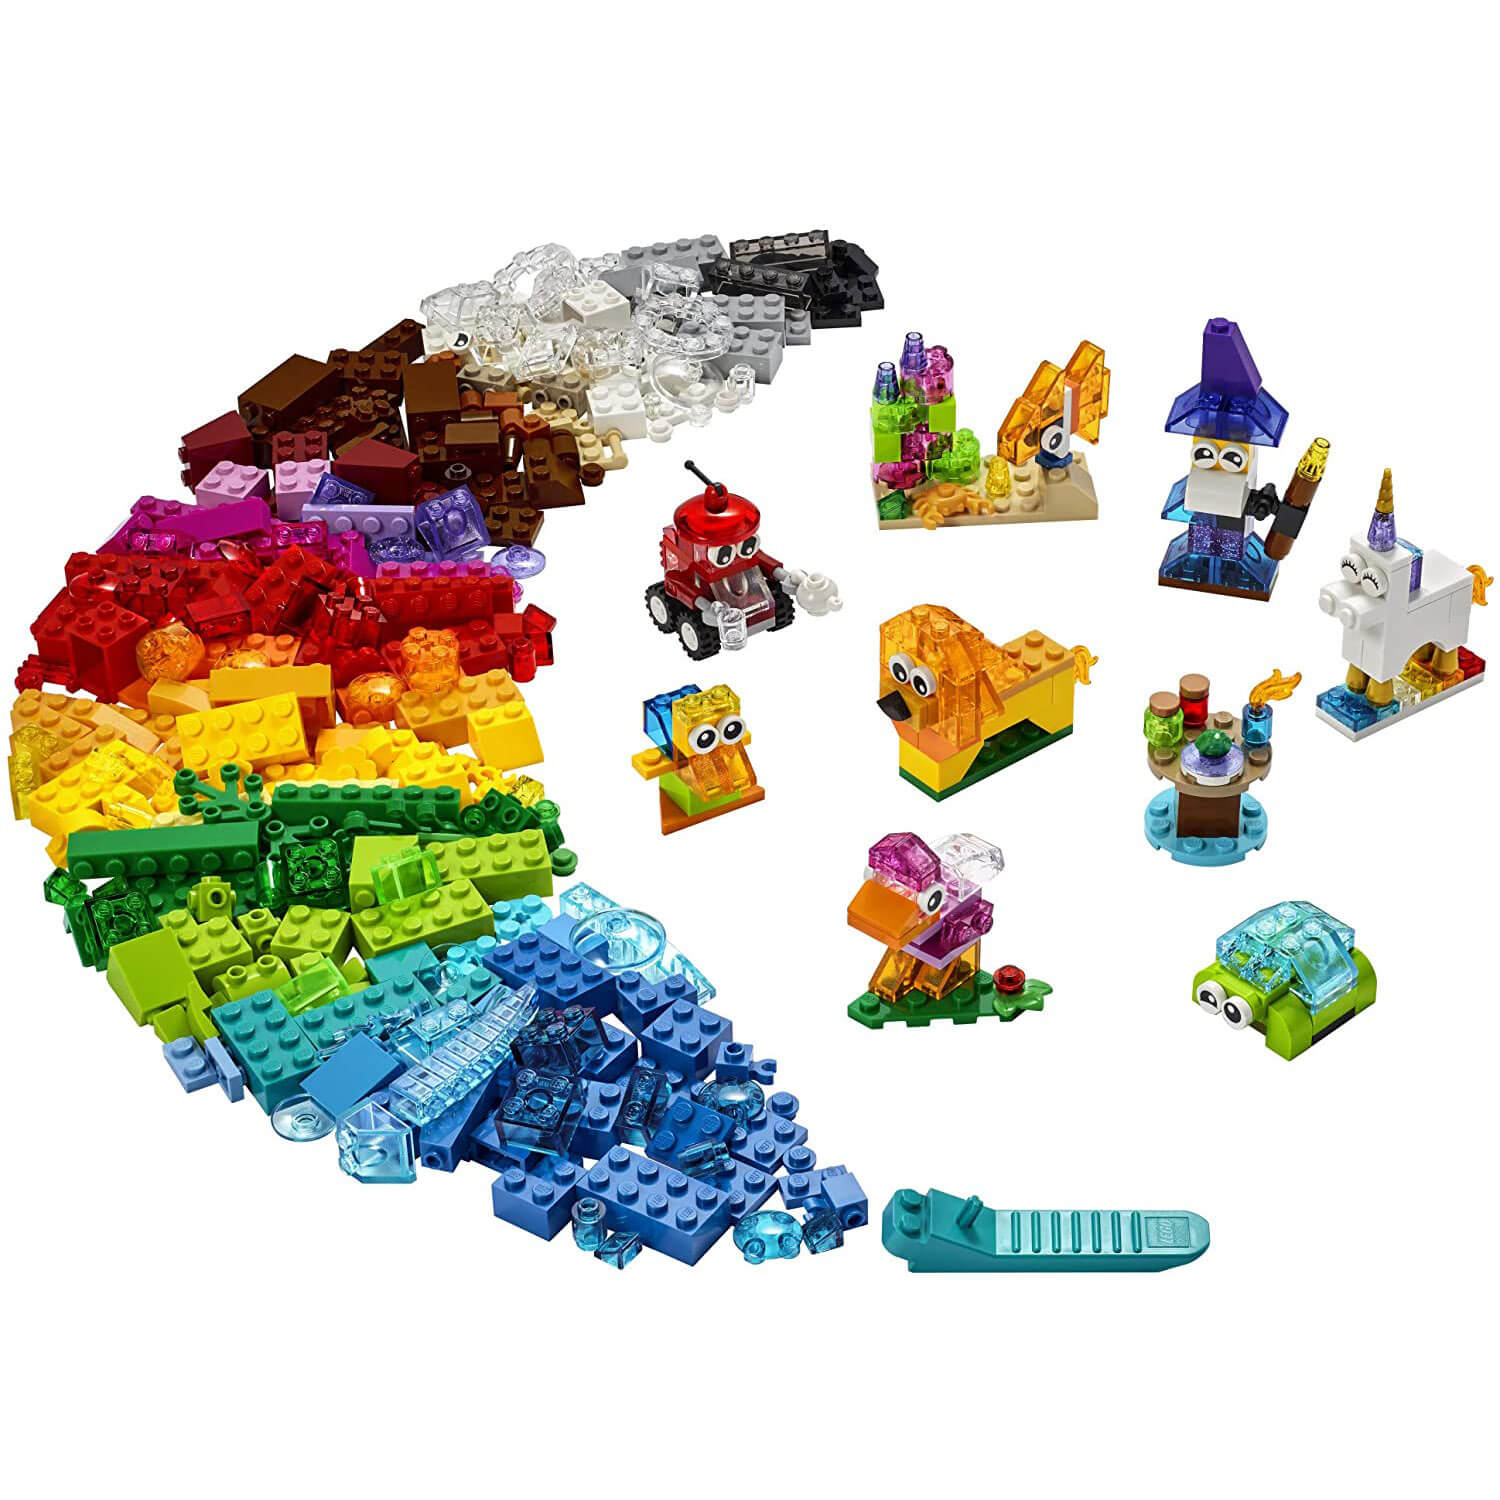 LEGO Classic Creative Transparent Bricks 500 Piece Building Set (11013)